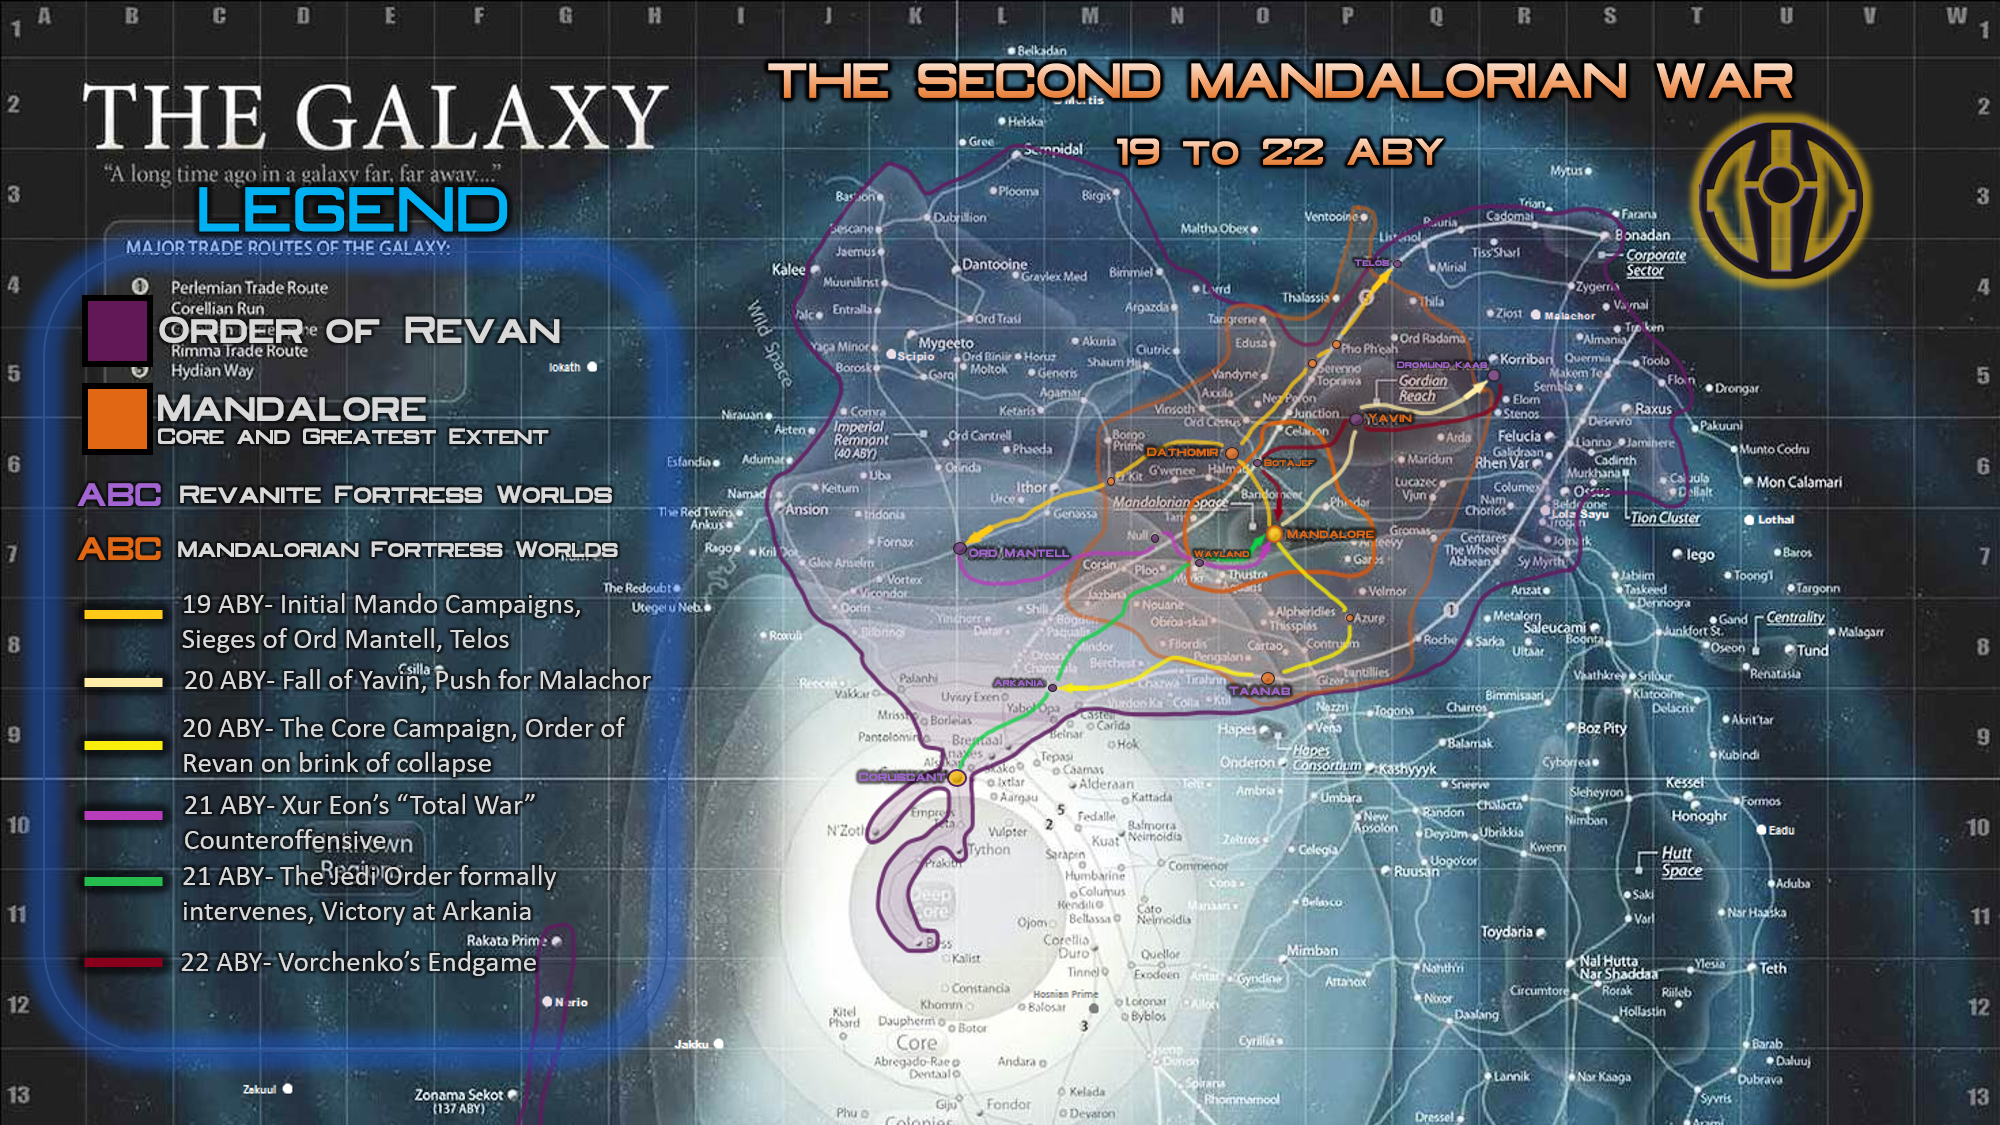 When Is Mandalorian Set in the Star Wars Timeline?